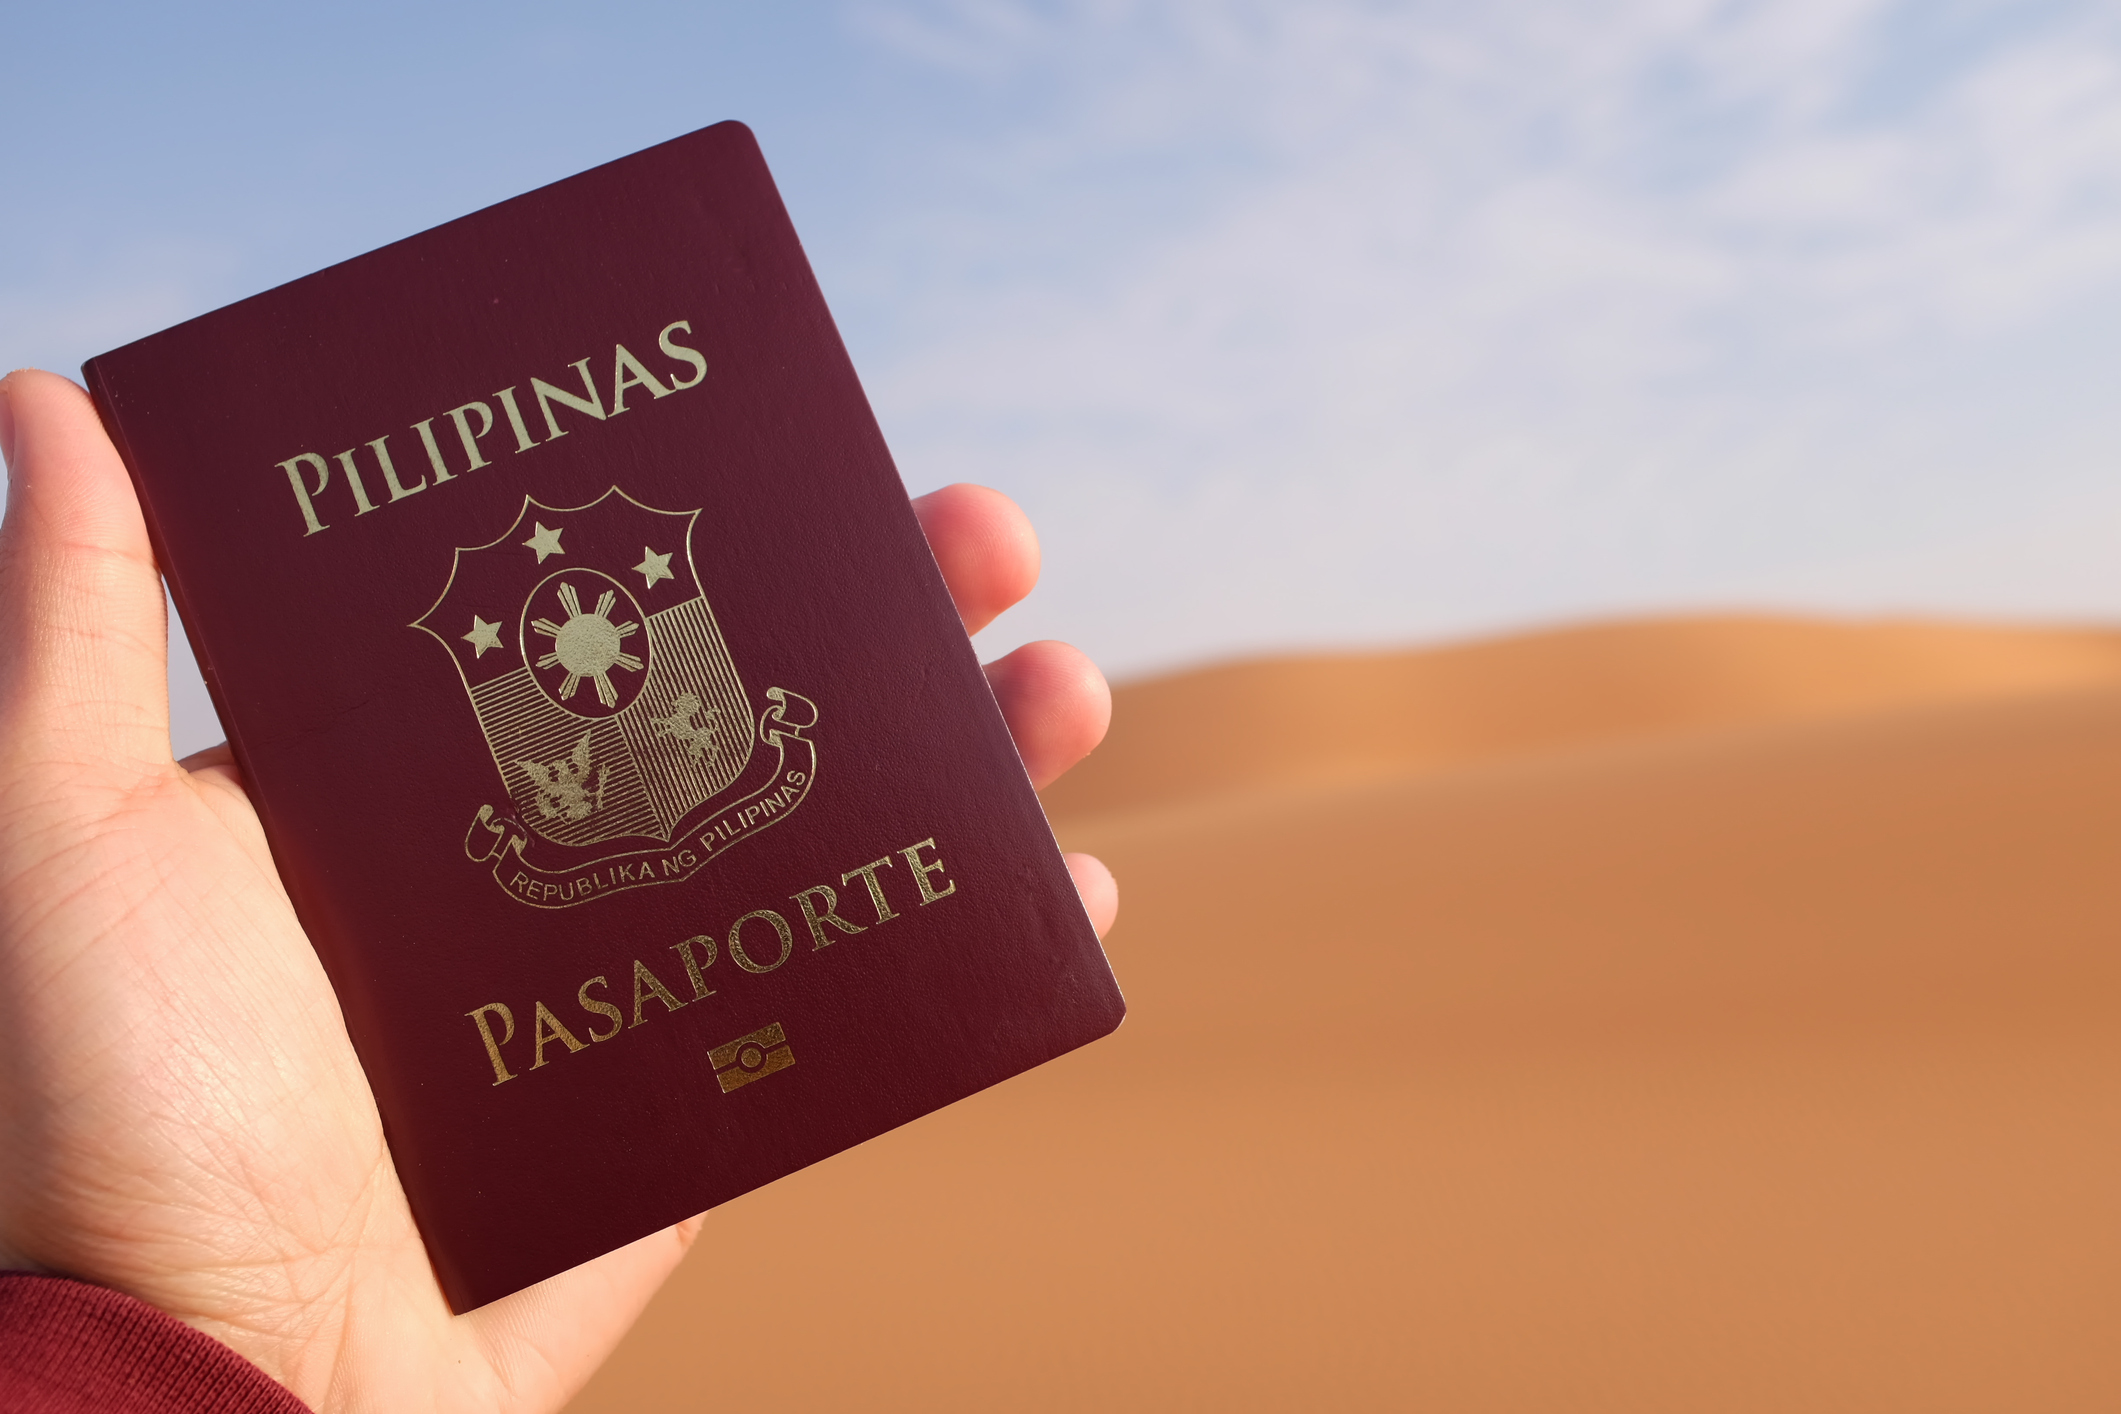 Hand holding up a Philippine passport in a desert.